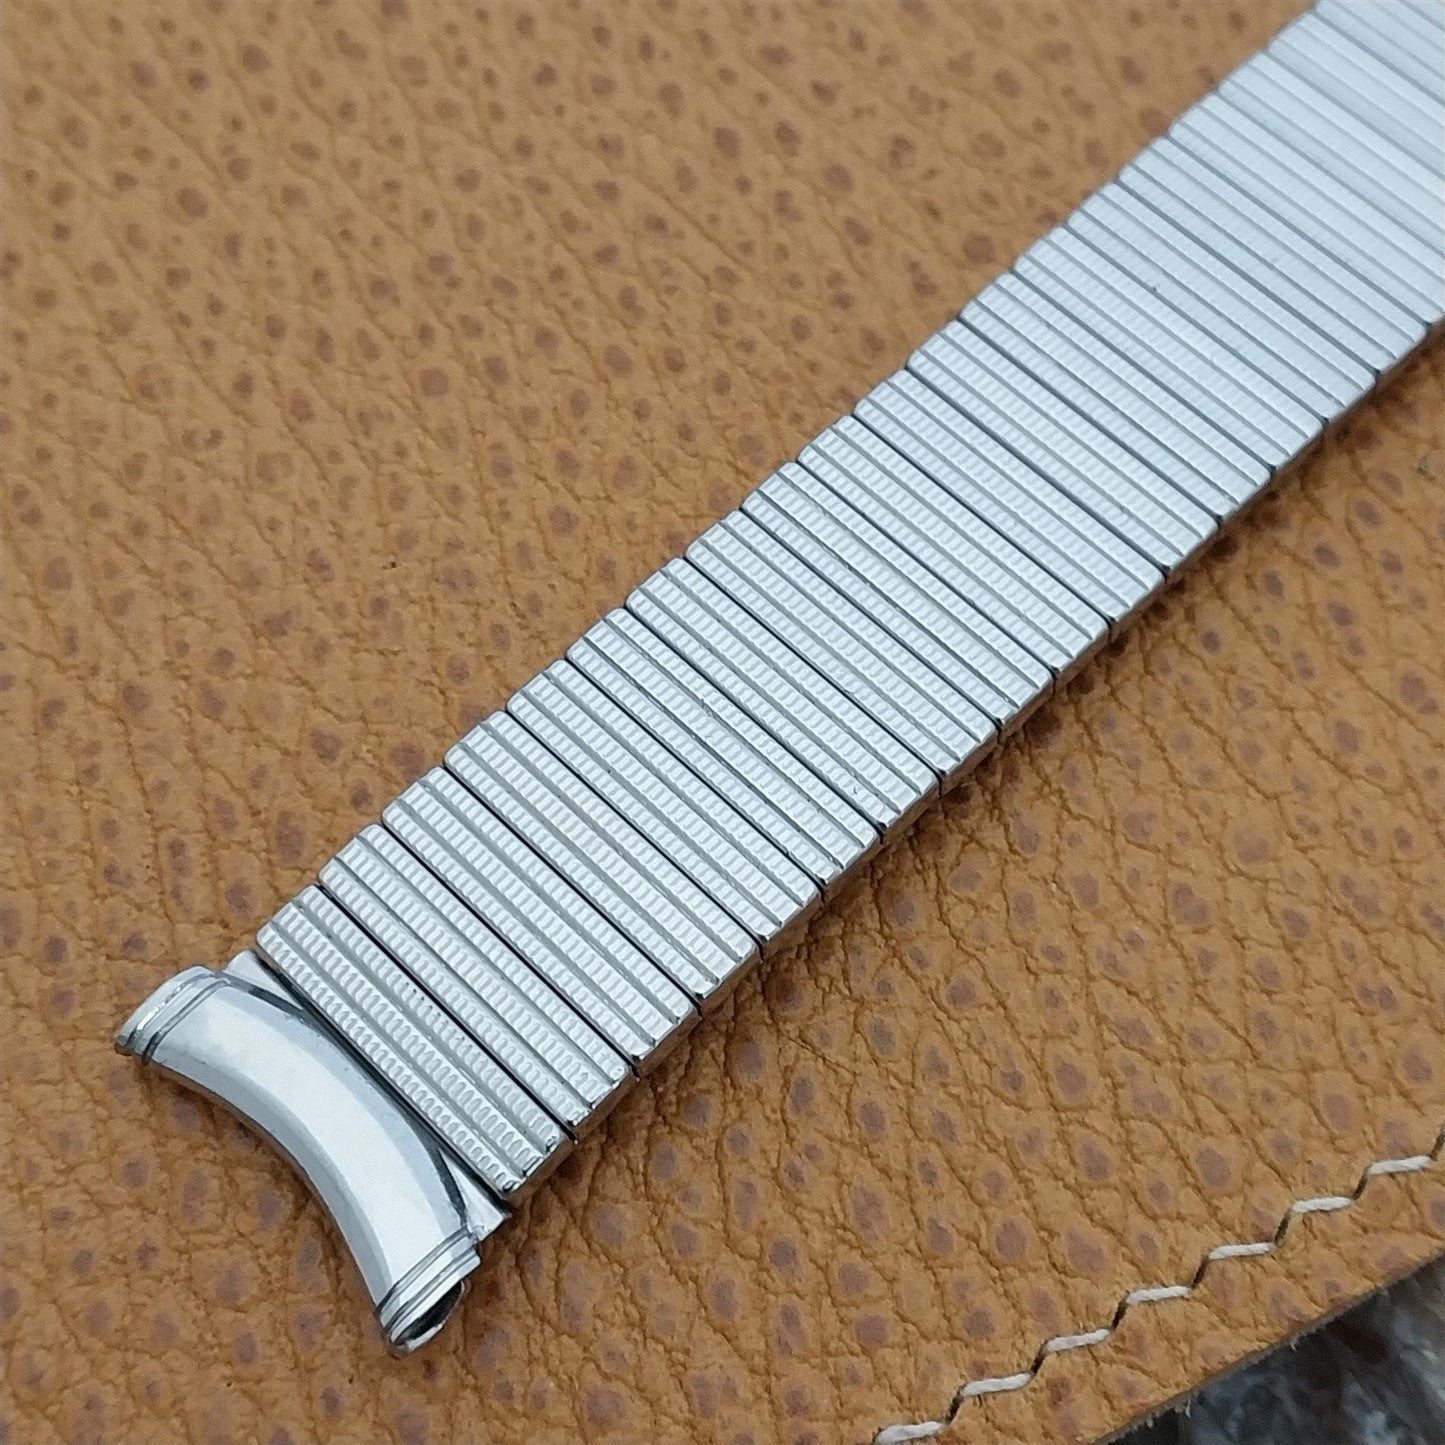 19mm 18mm 17mm Kreisler Stainless Steel Long DuraFlex 1960s Vintage Watch Band